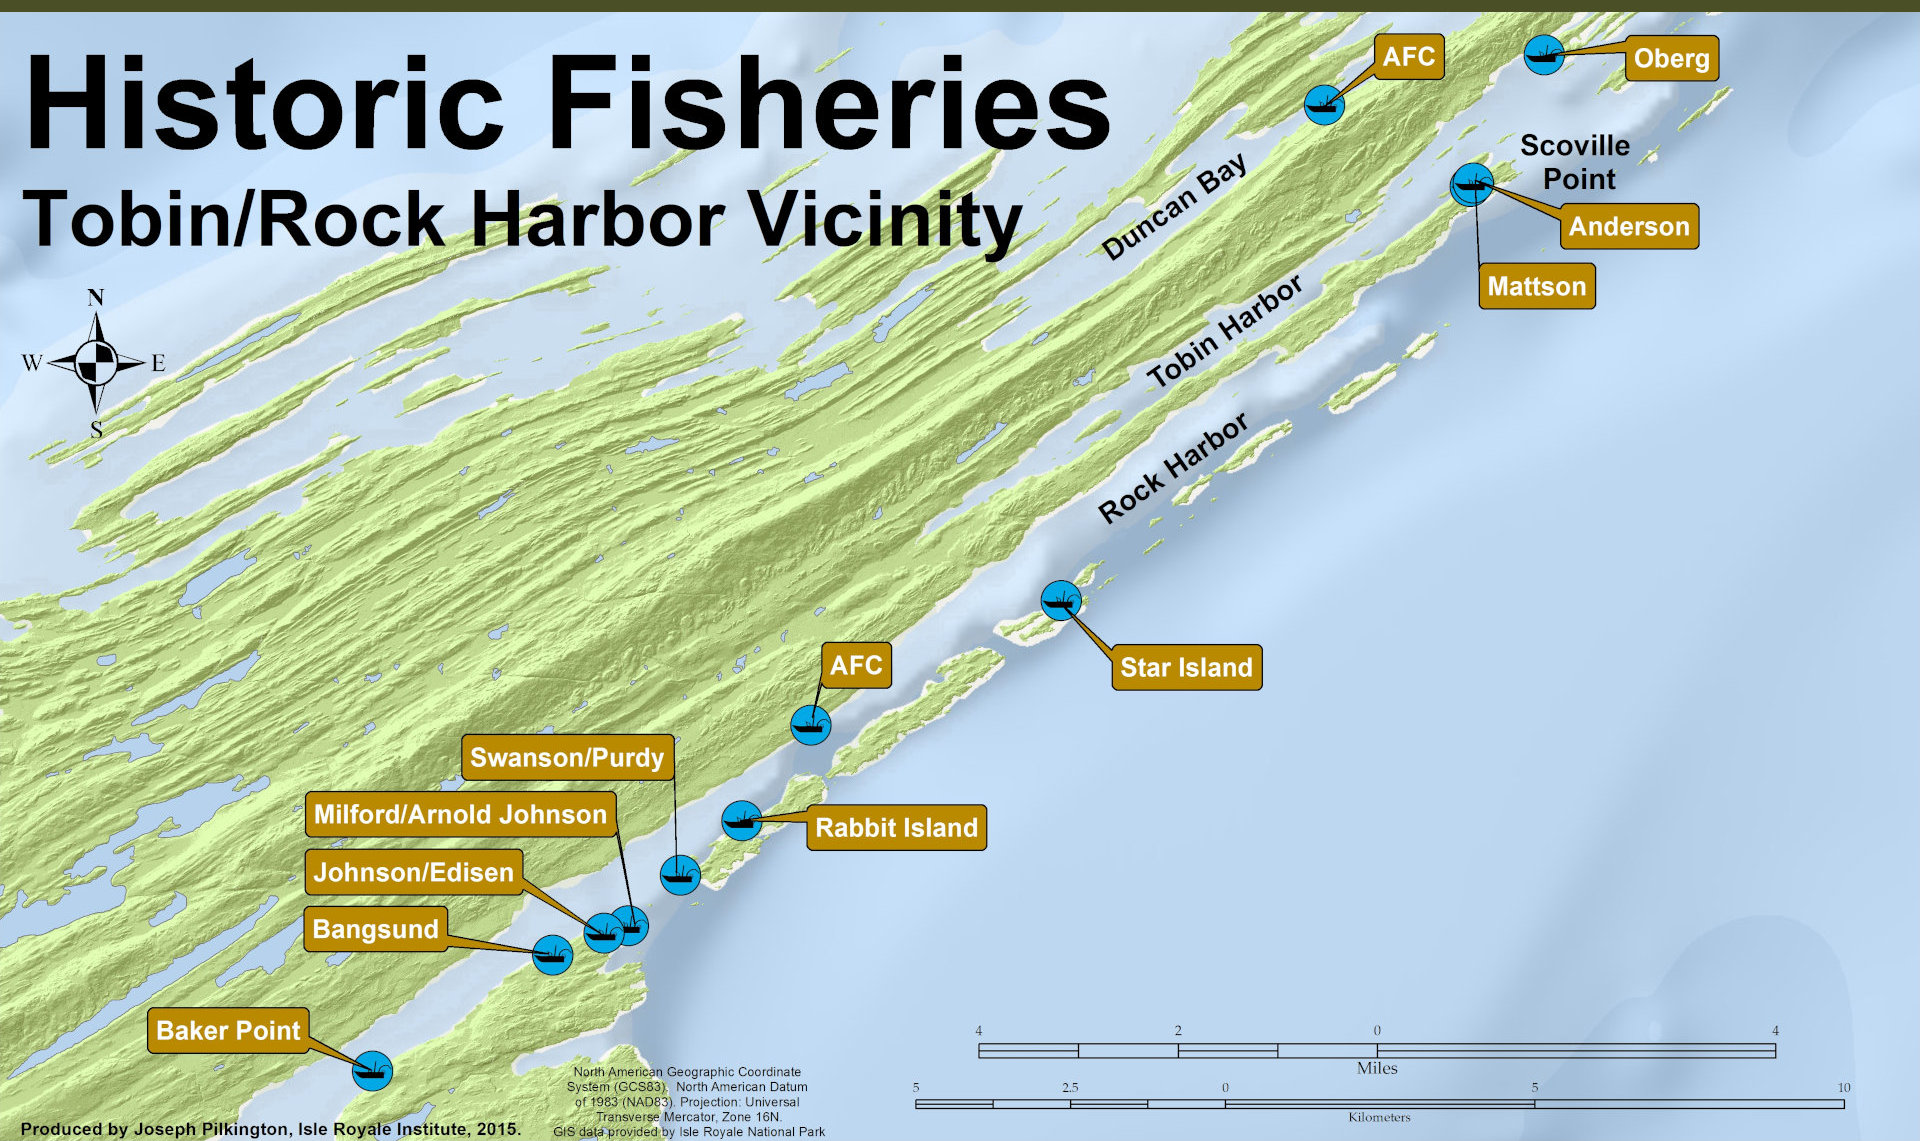 Fisheries - Isle Royale National Park (U.S. National Park Service)